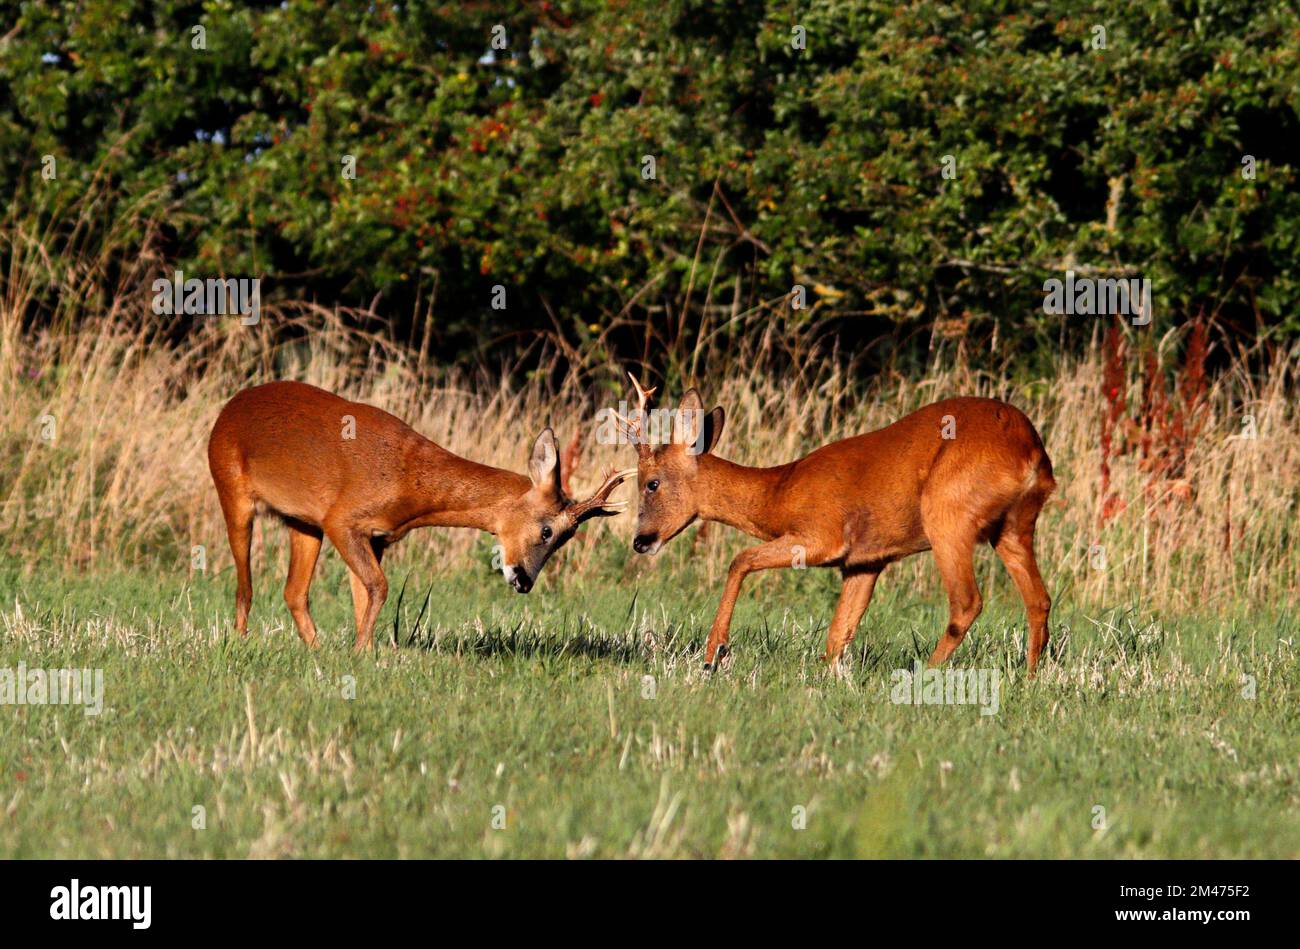 ROE DEER (Capreolus capreolus) bucks (males) fighting during the rutting season, Scotland, UK. Stock Photo